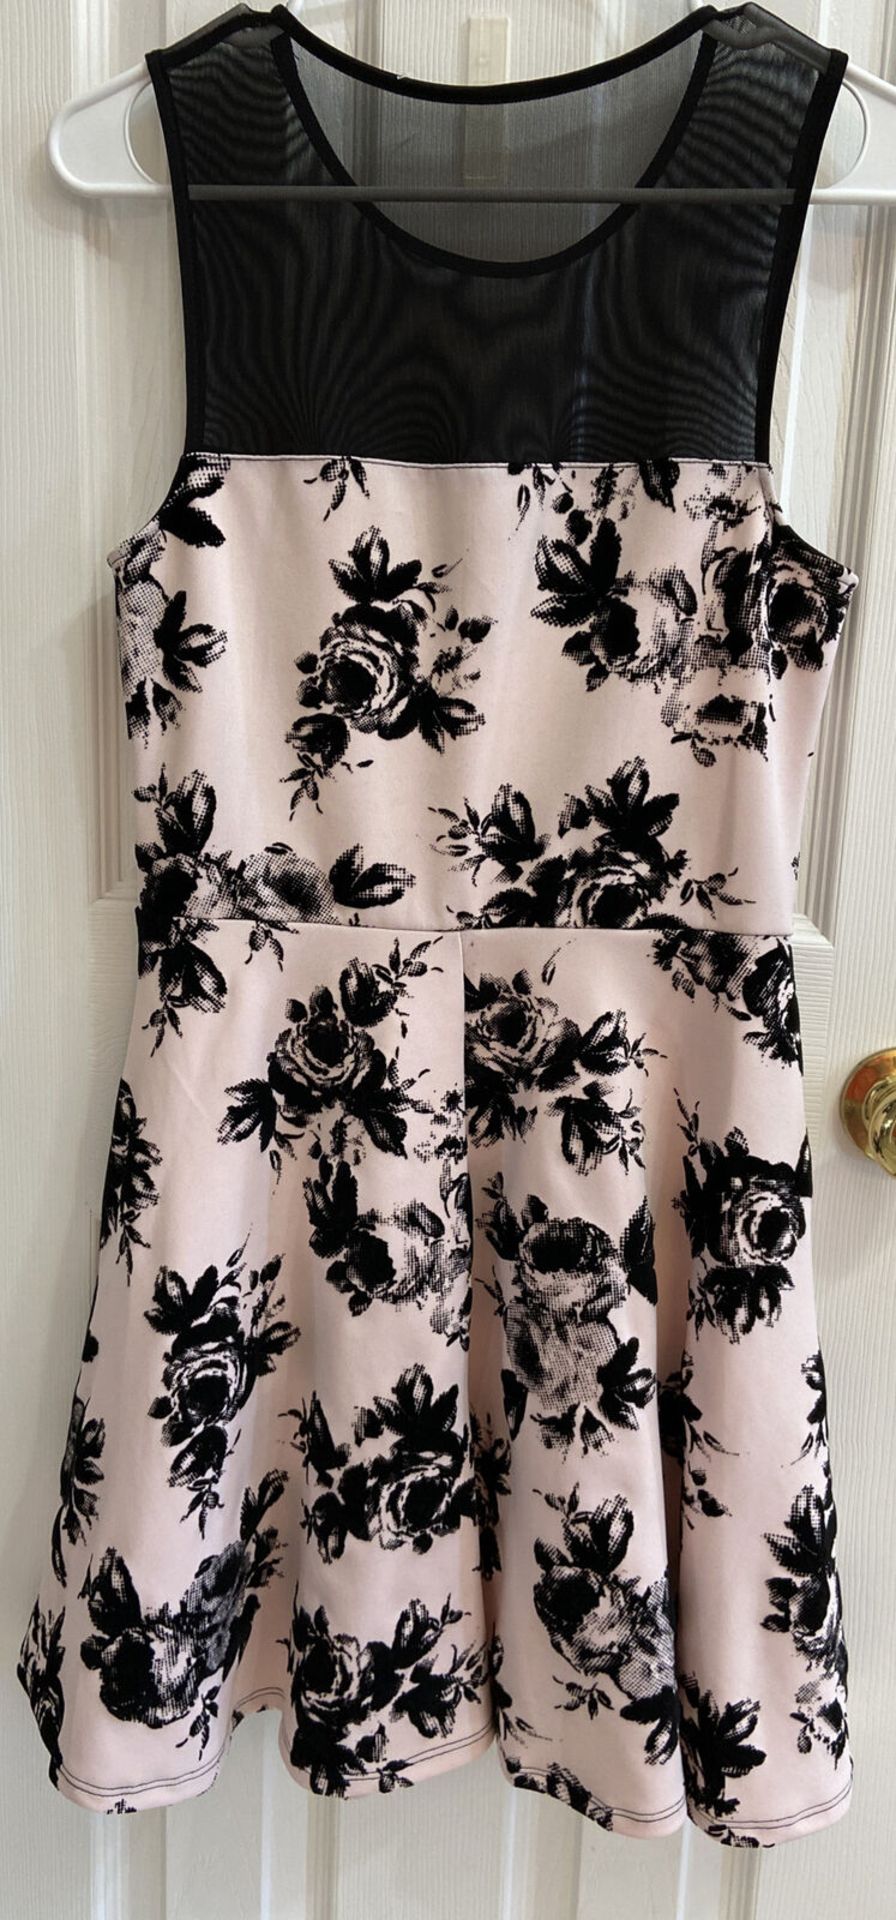 Trixxi I Flocked Illusion Fit & Flare Pink/Black Dress Size Medium Floral - Image 4 of 4